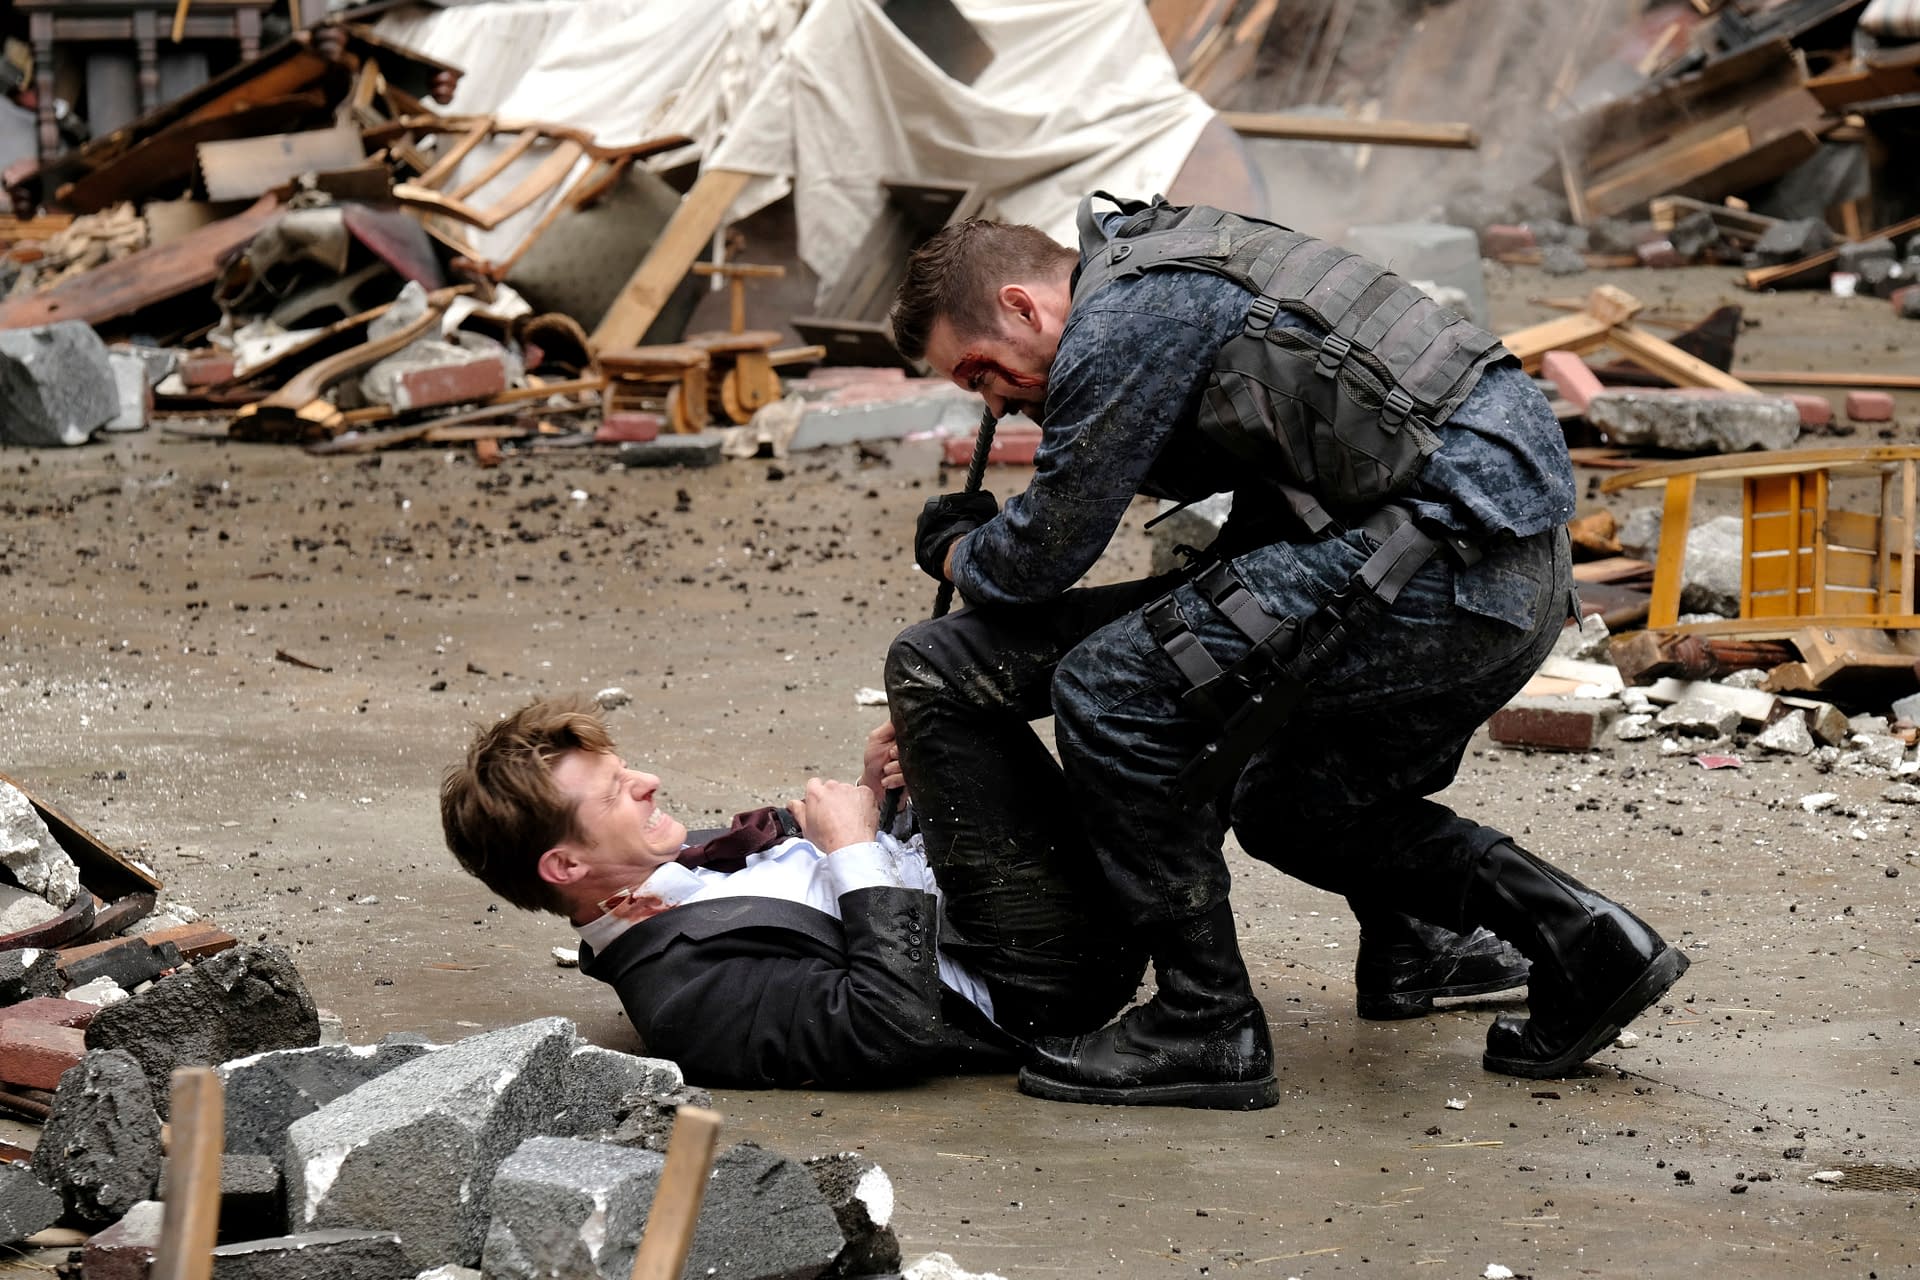 'Gotham' Season 5, Episode 6 Brings "13 Stitches" to a City in Turmoil [SPOILER REVIEW]